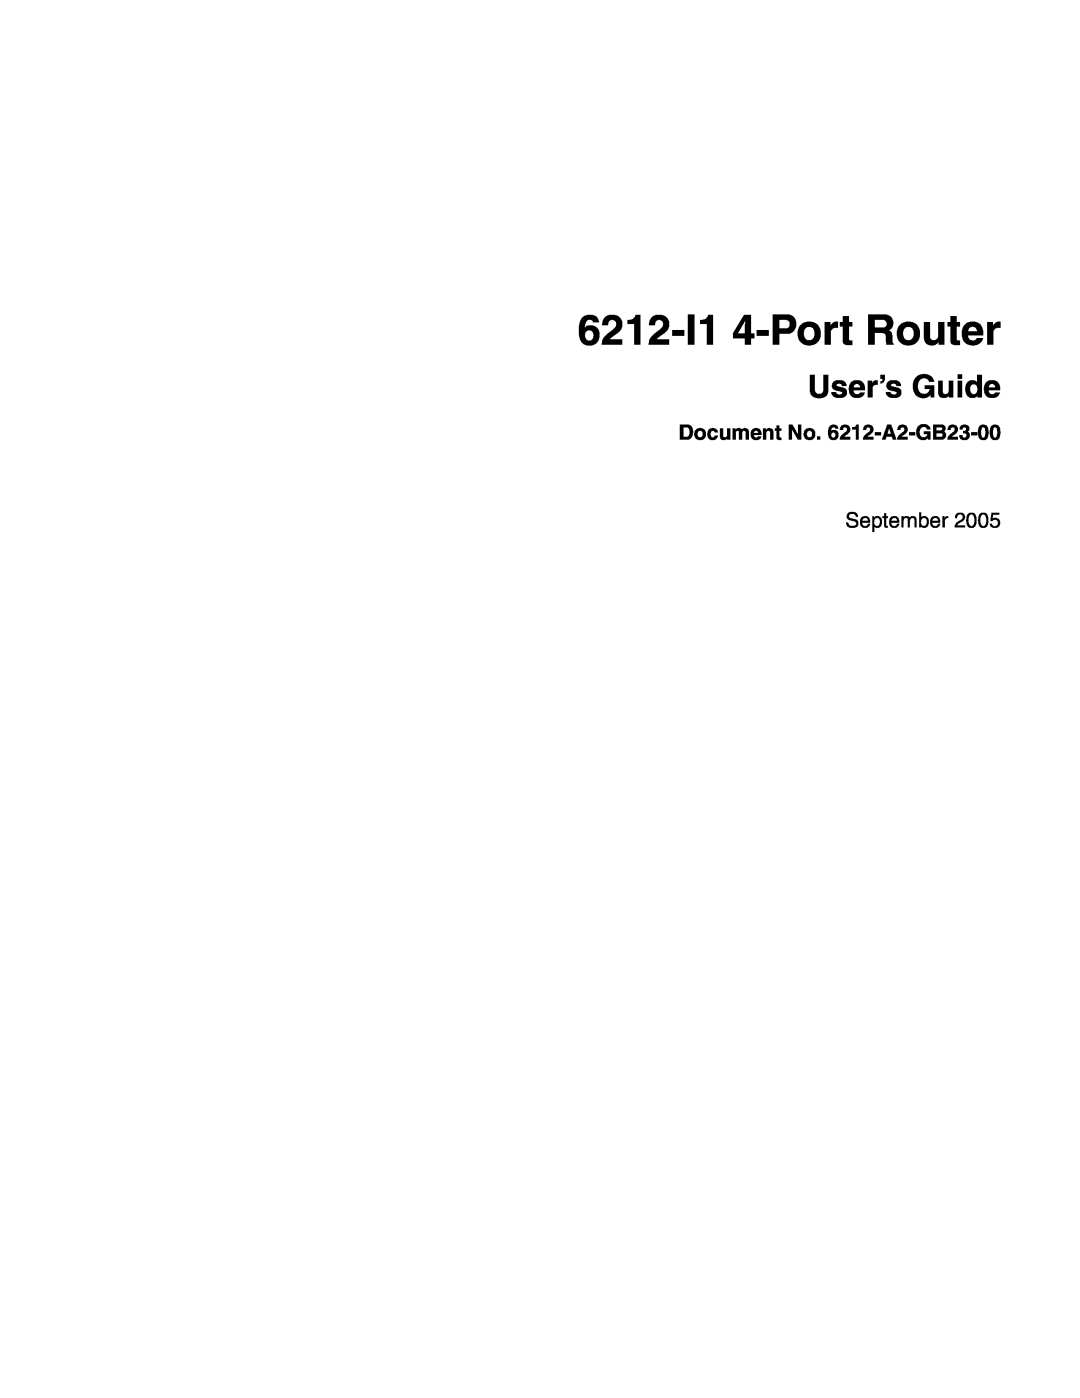 Paradyne manual 6212-I1 4-Port Router, User’s Guide, Document No. 6212-A2-GB23-00, September 